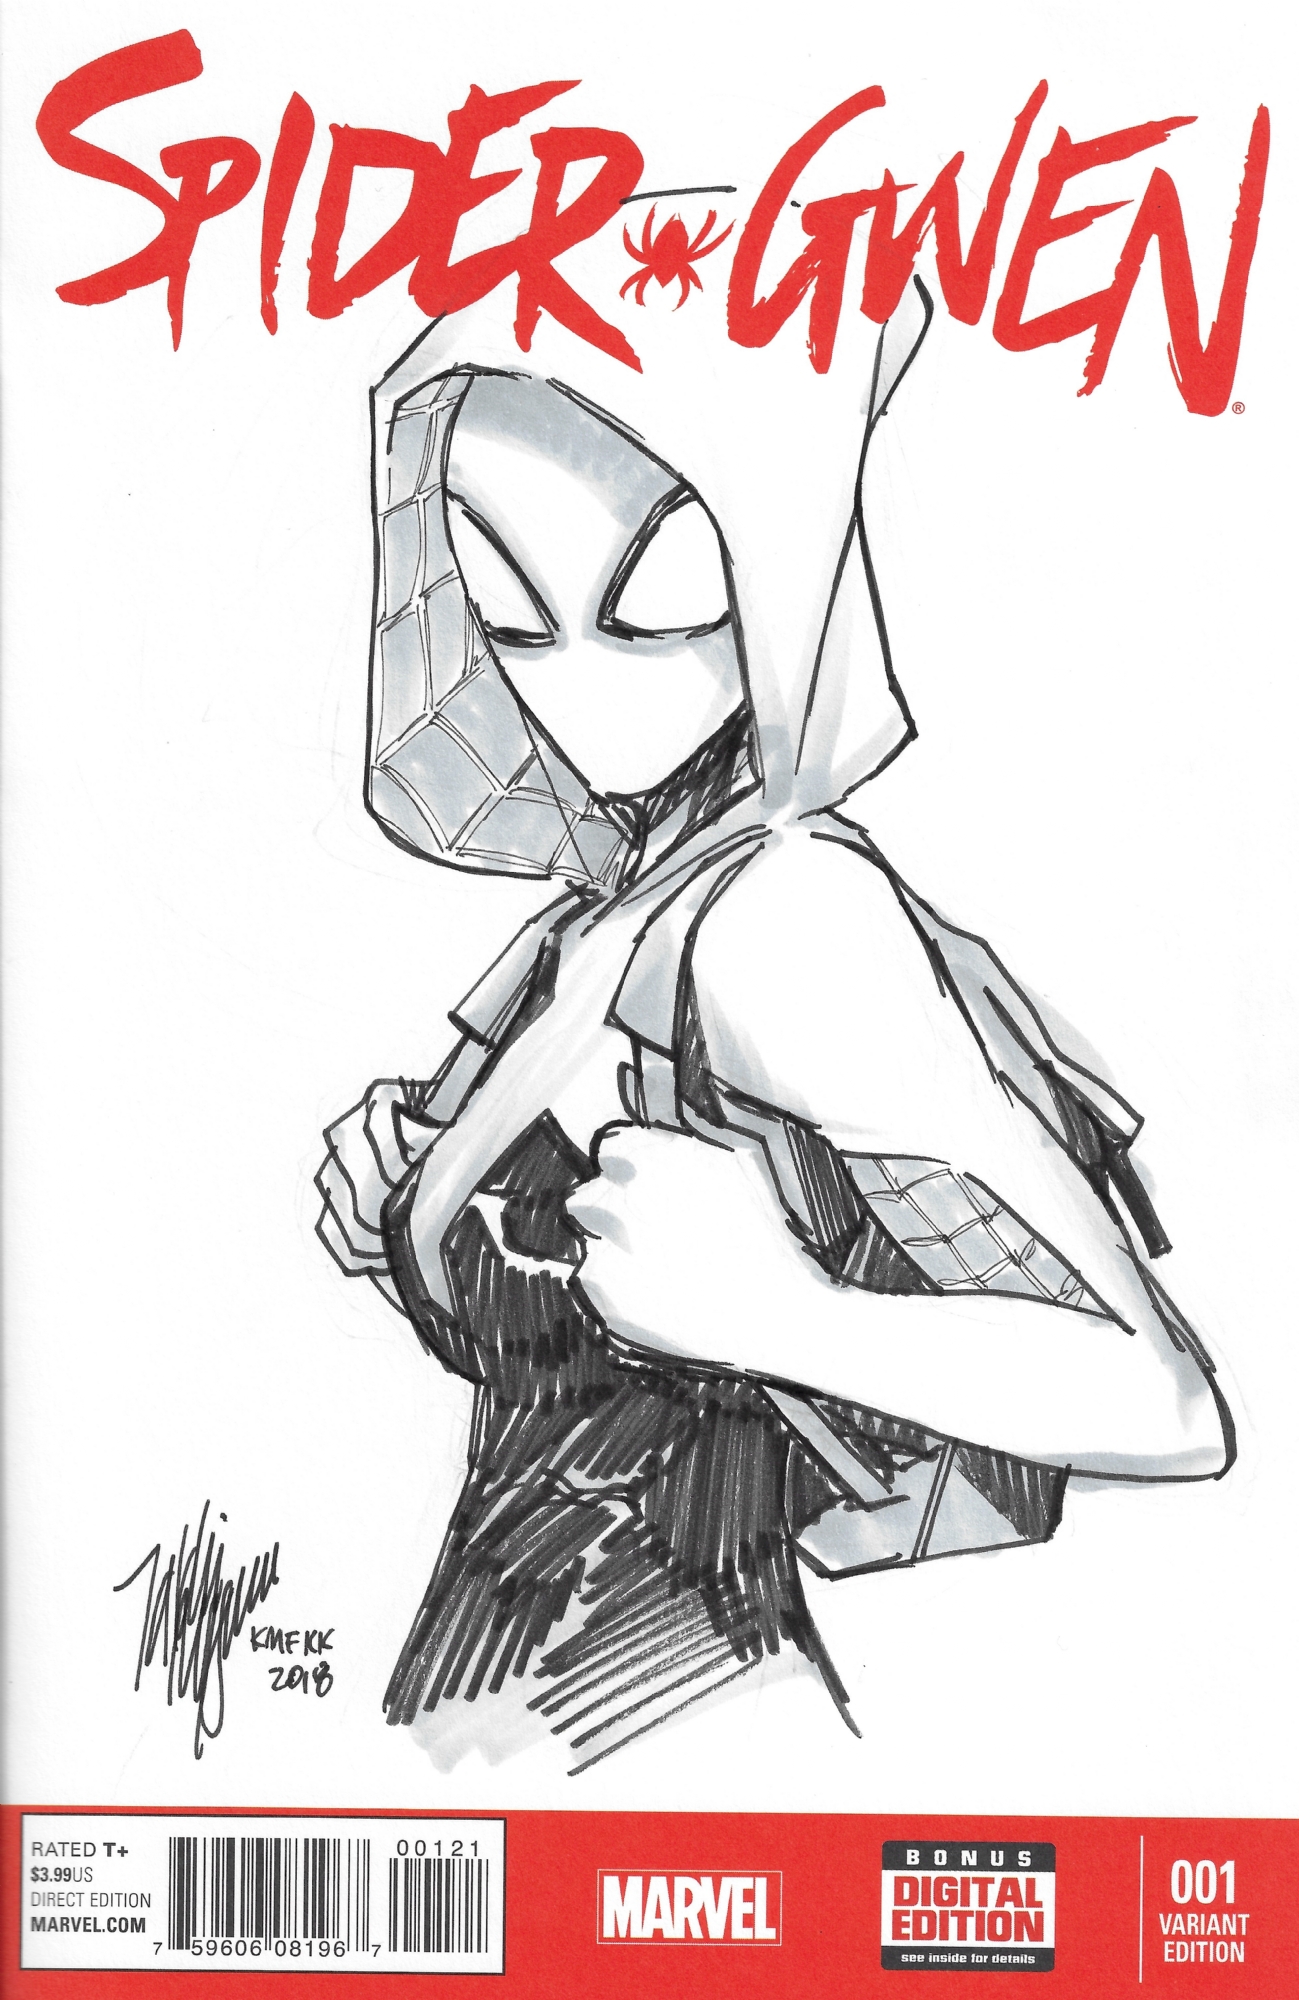 Spider-Gwen Blank Sketch , in Burke Daddy's Spider-Man Comic Art Gallery  Room